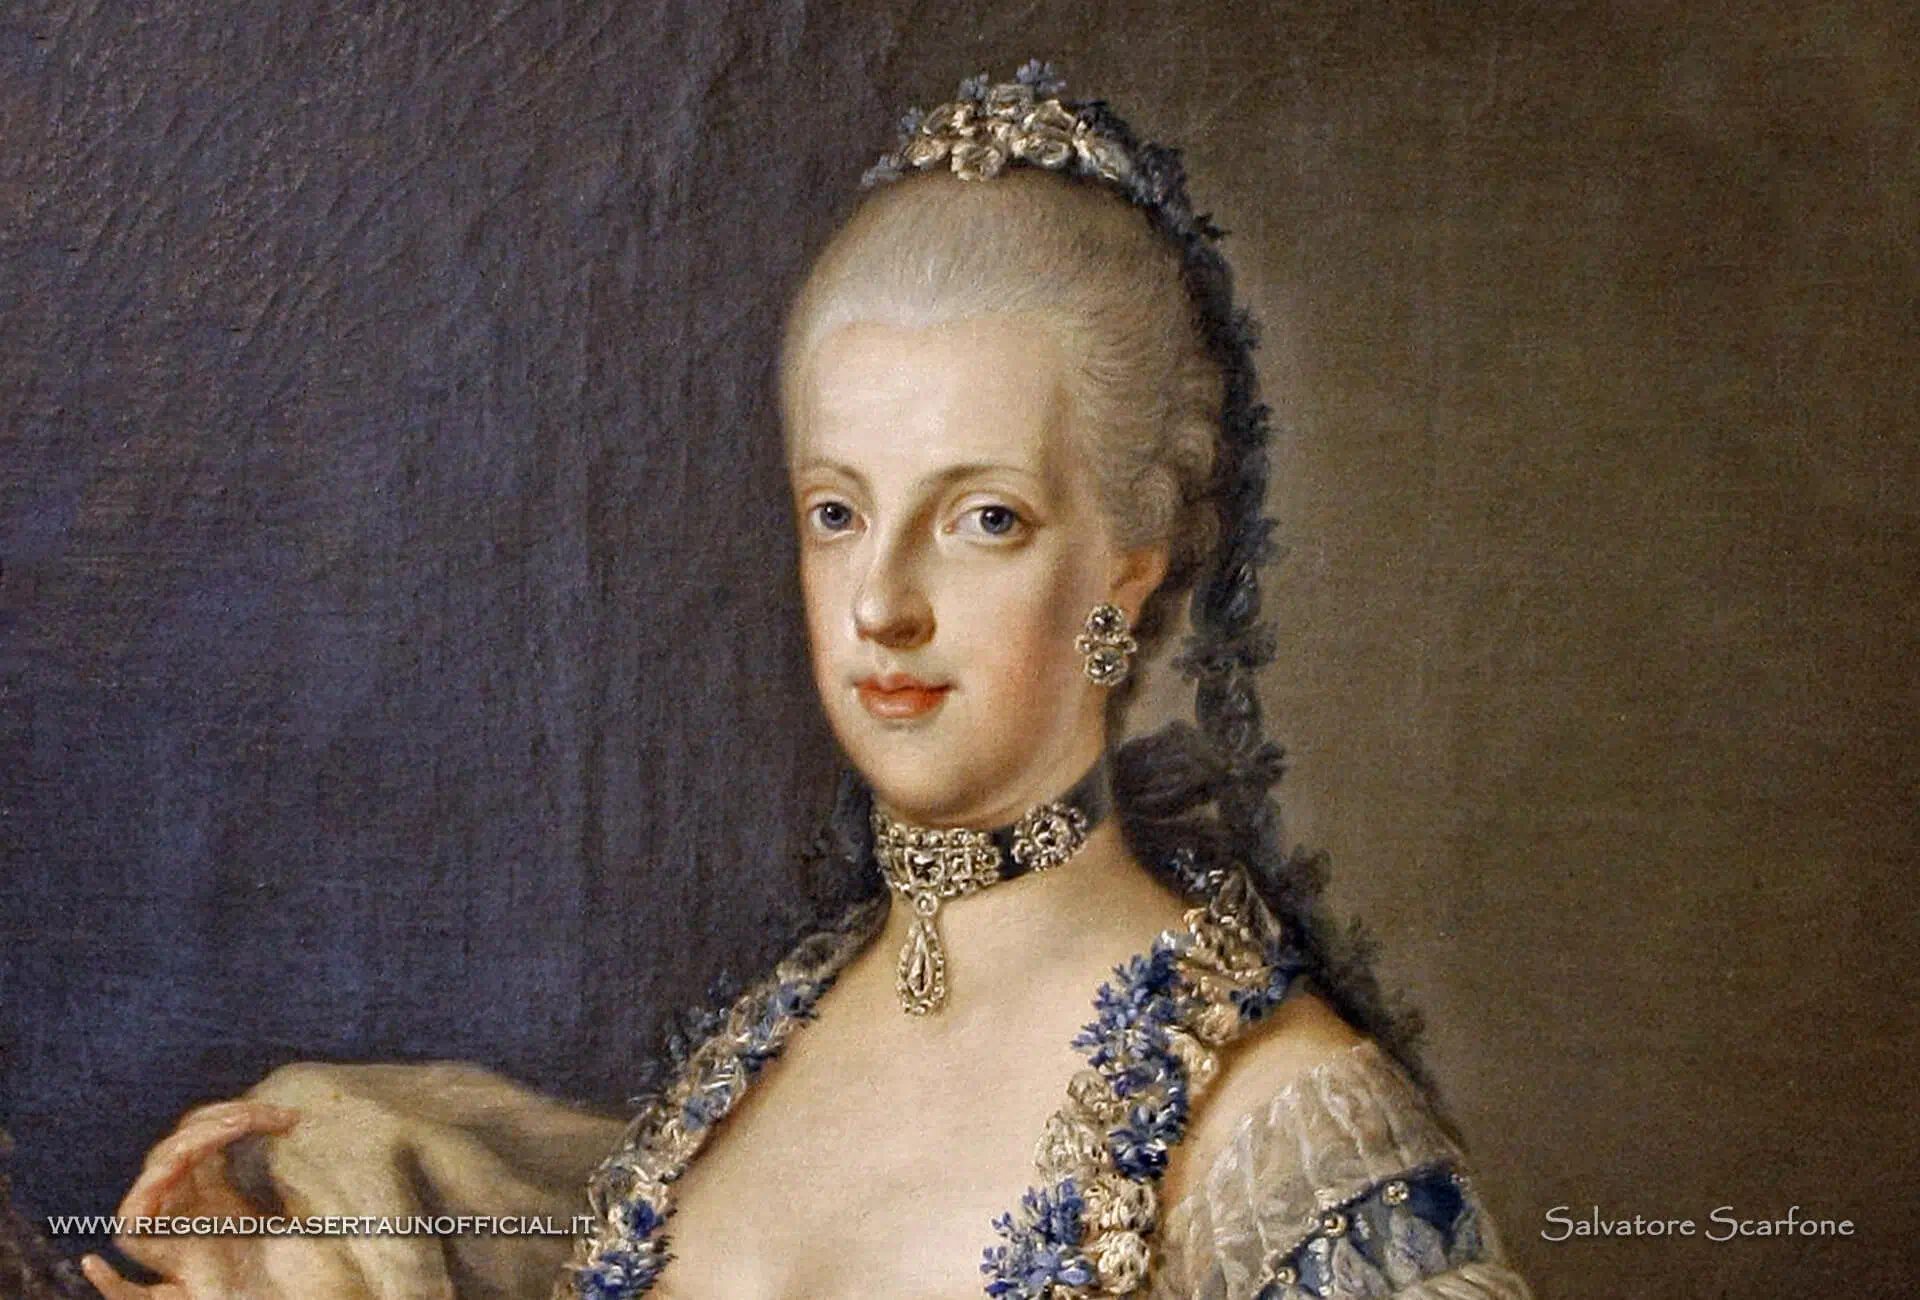 Queen Maria Carolina of Habsburg-Lorraine